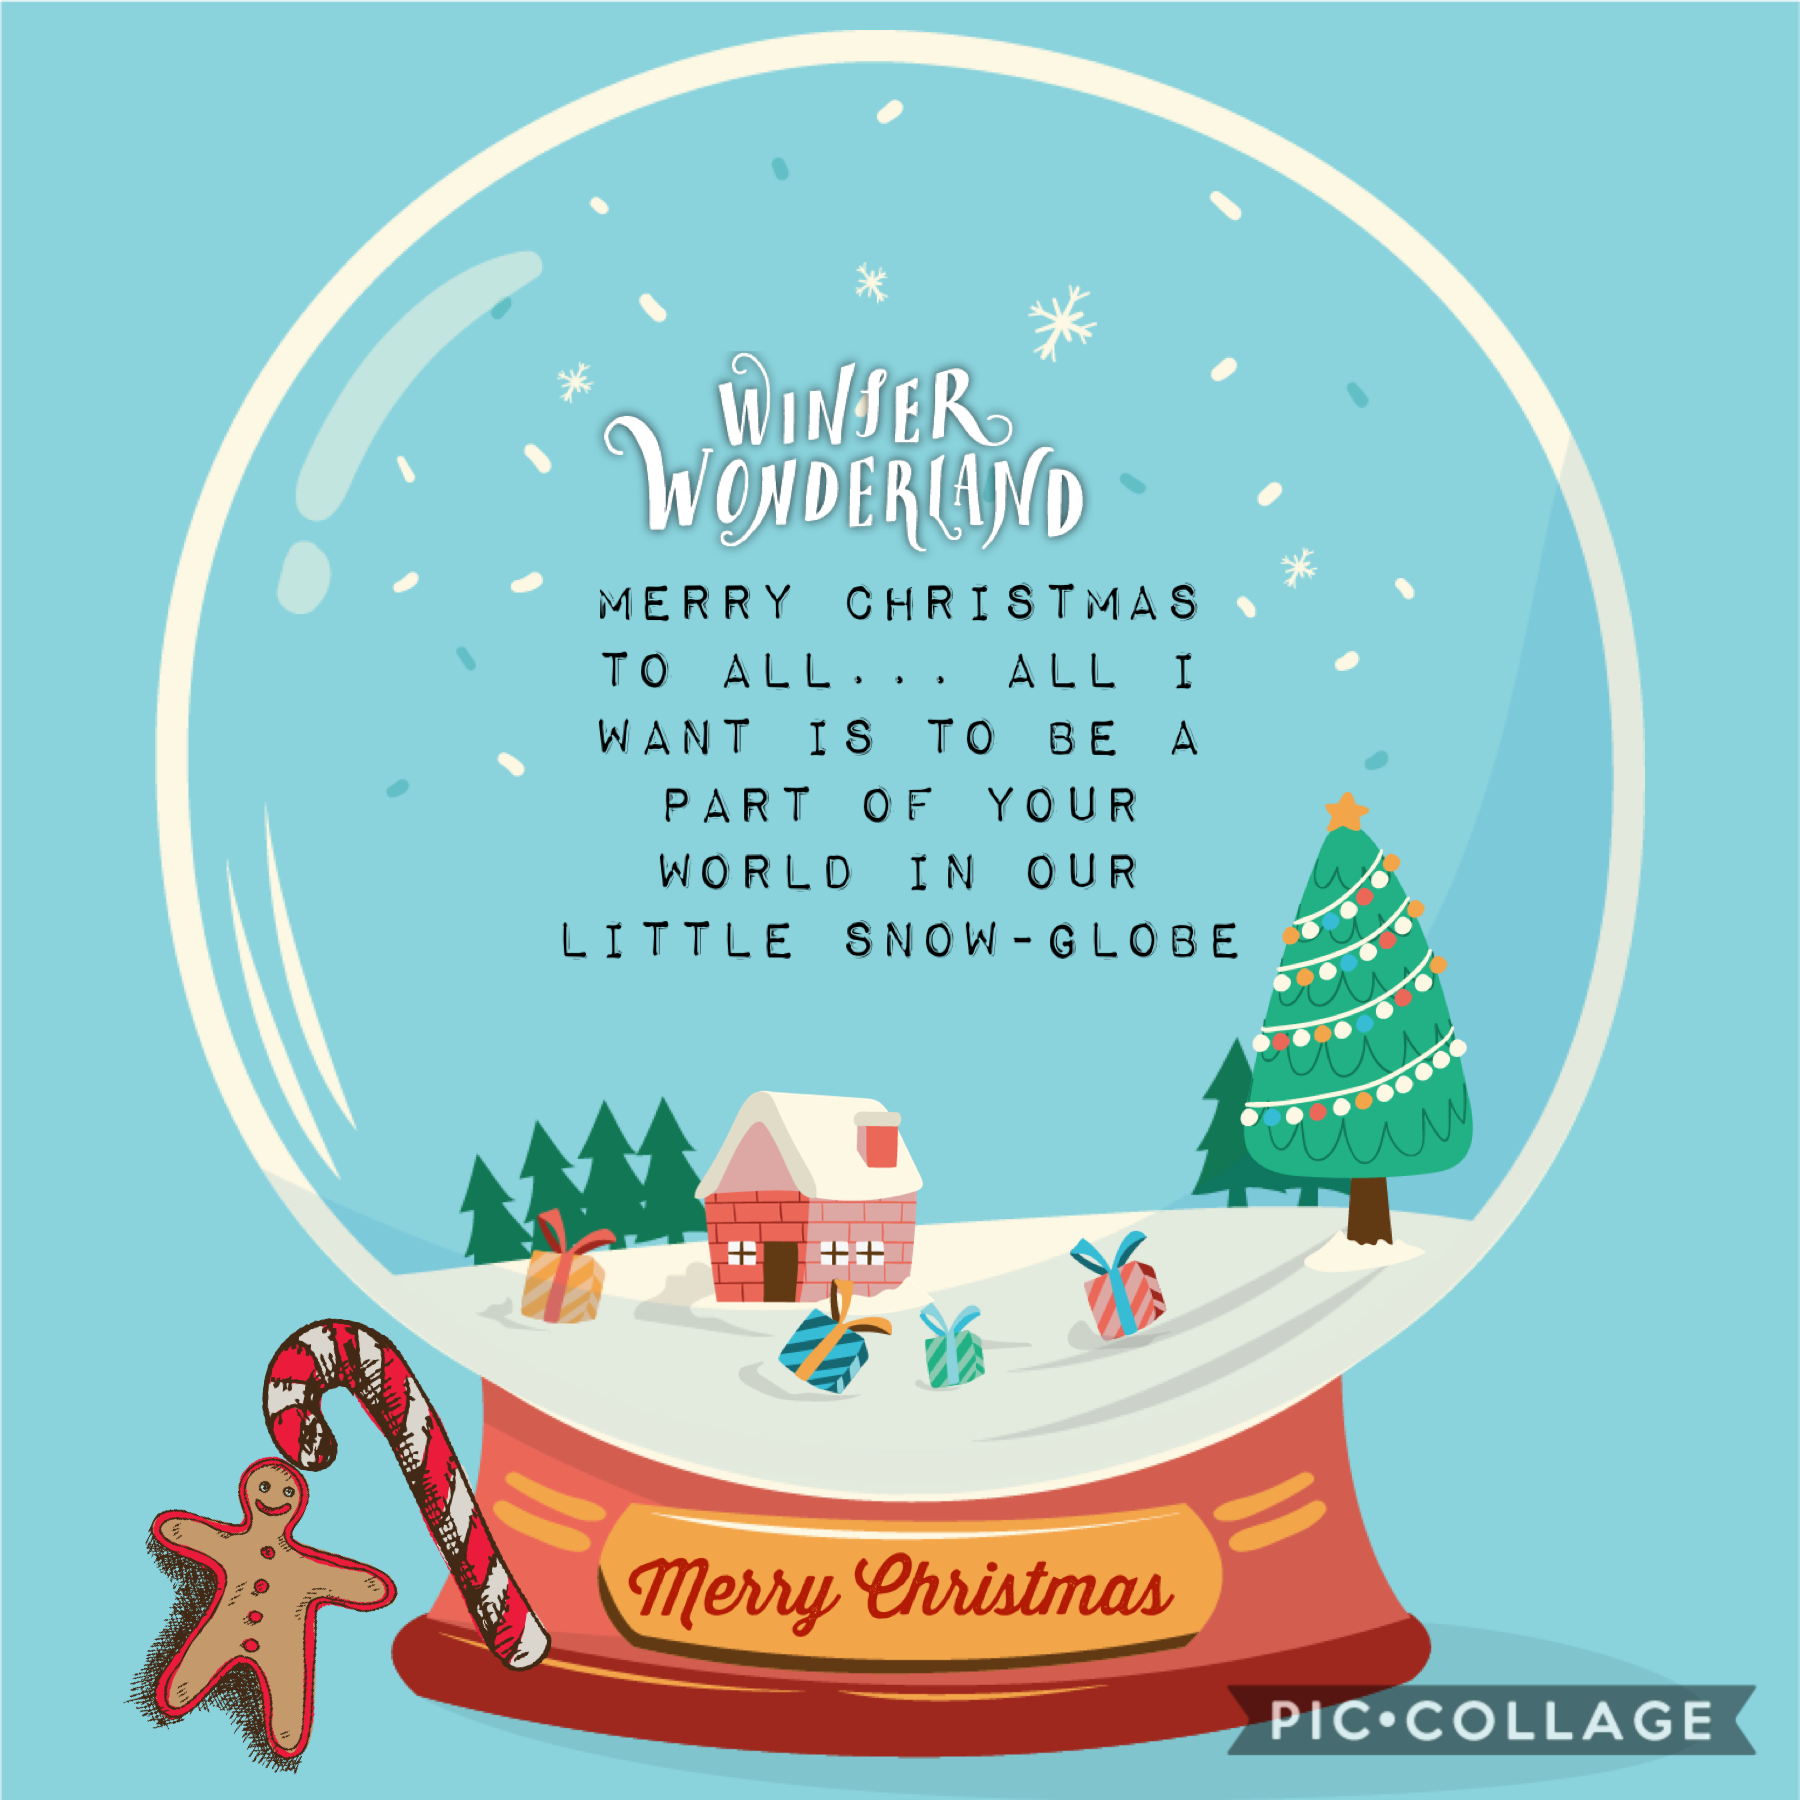 Merry Christmas everyone ☺️❤️